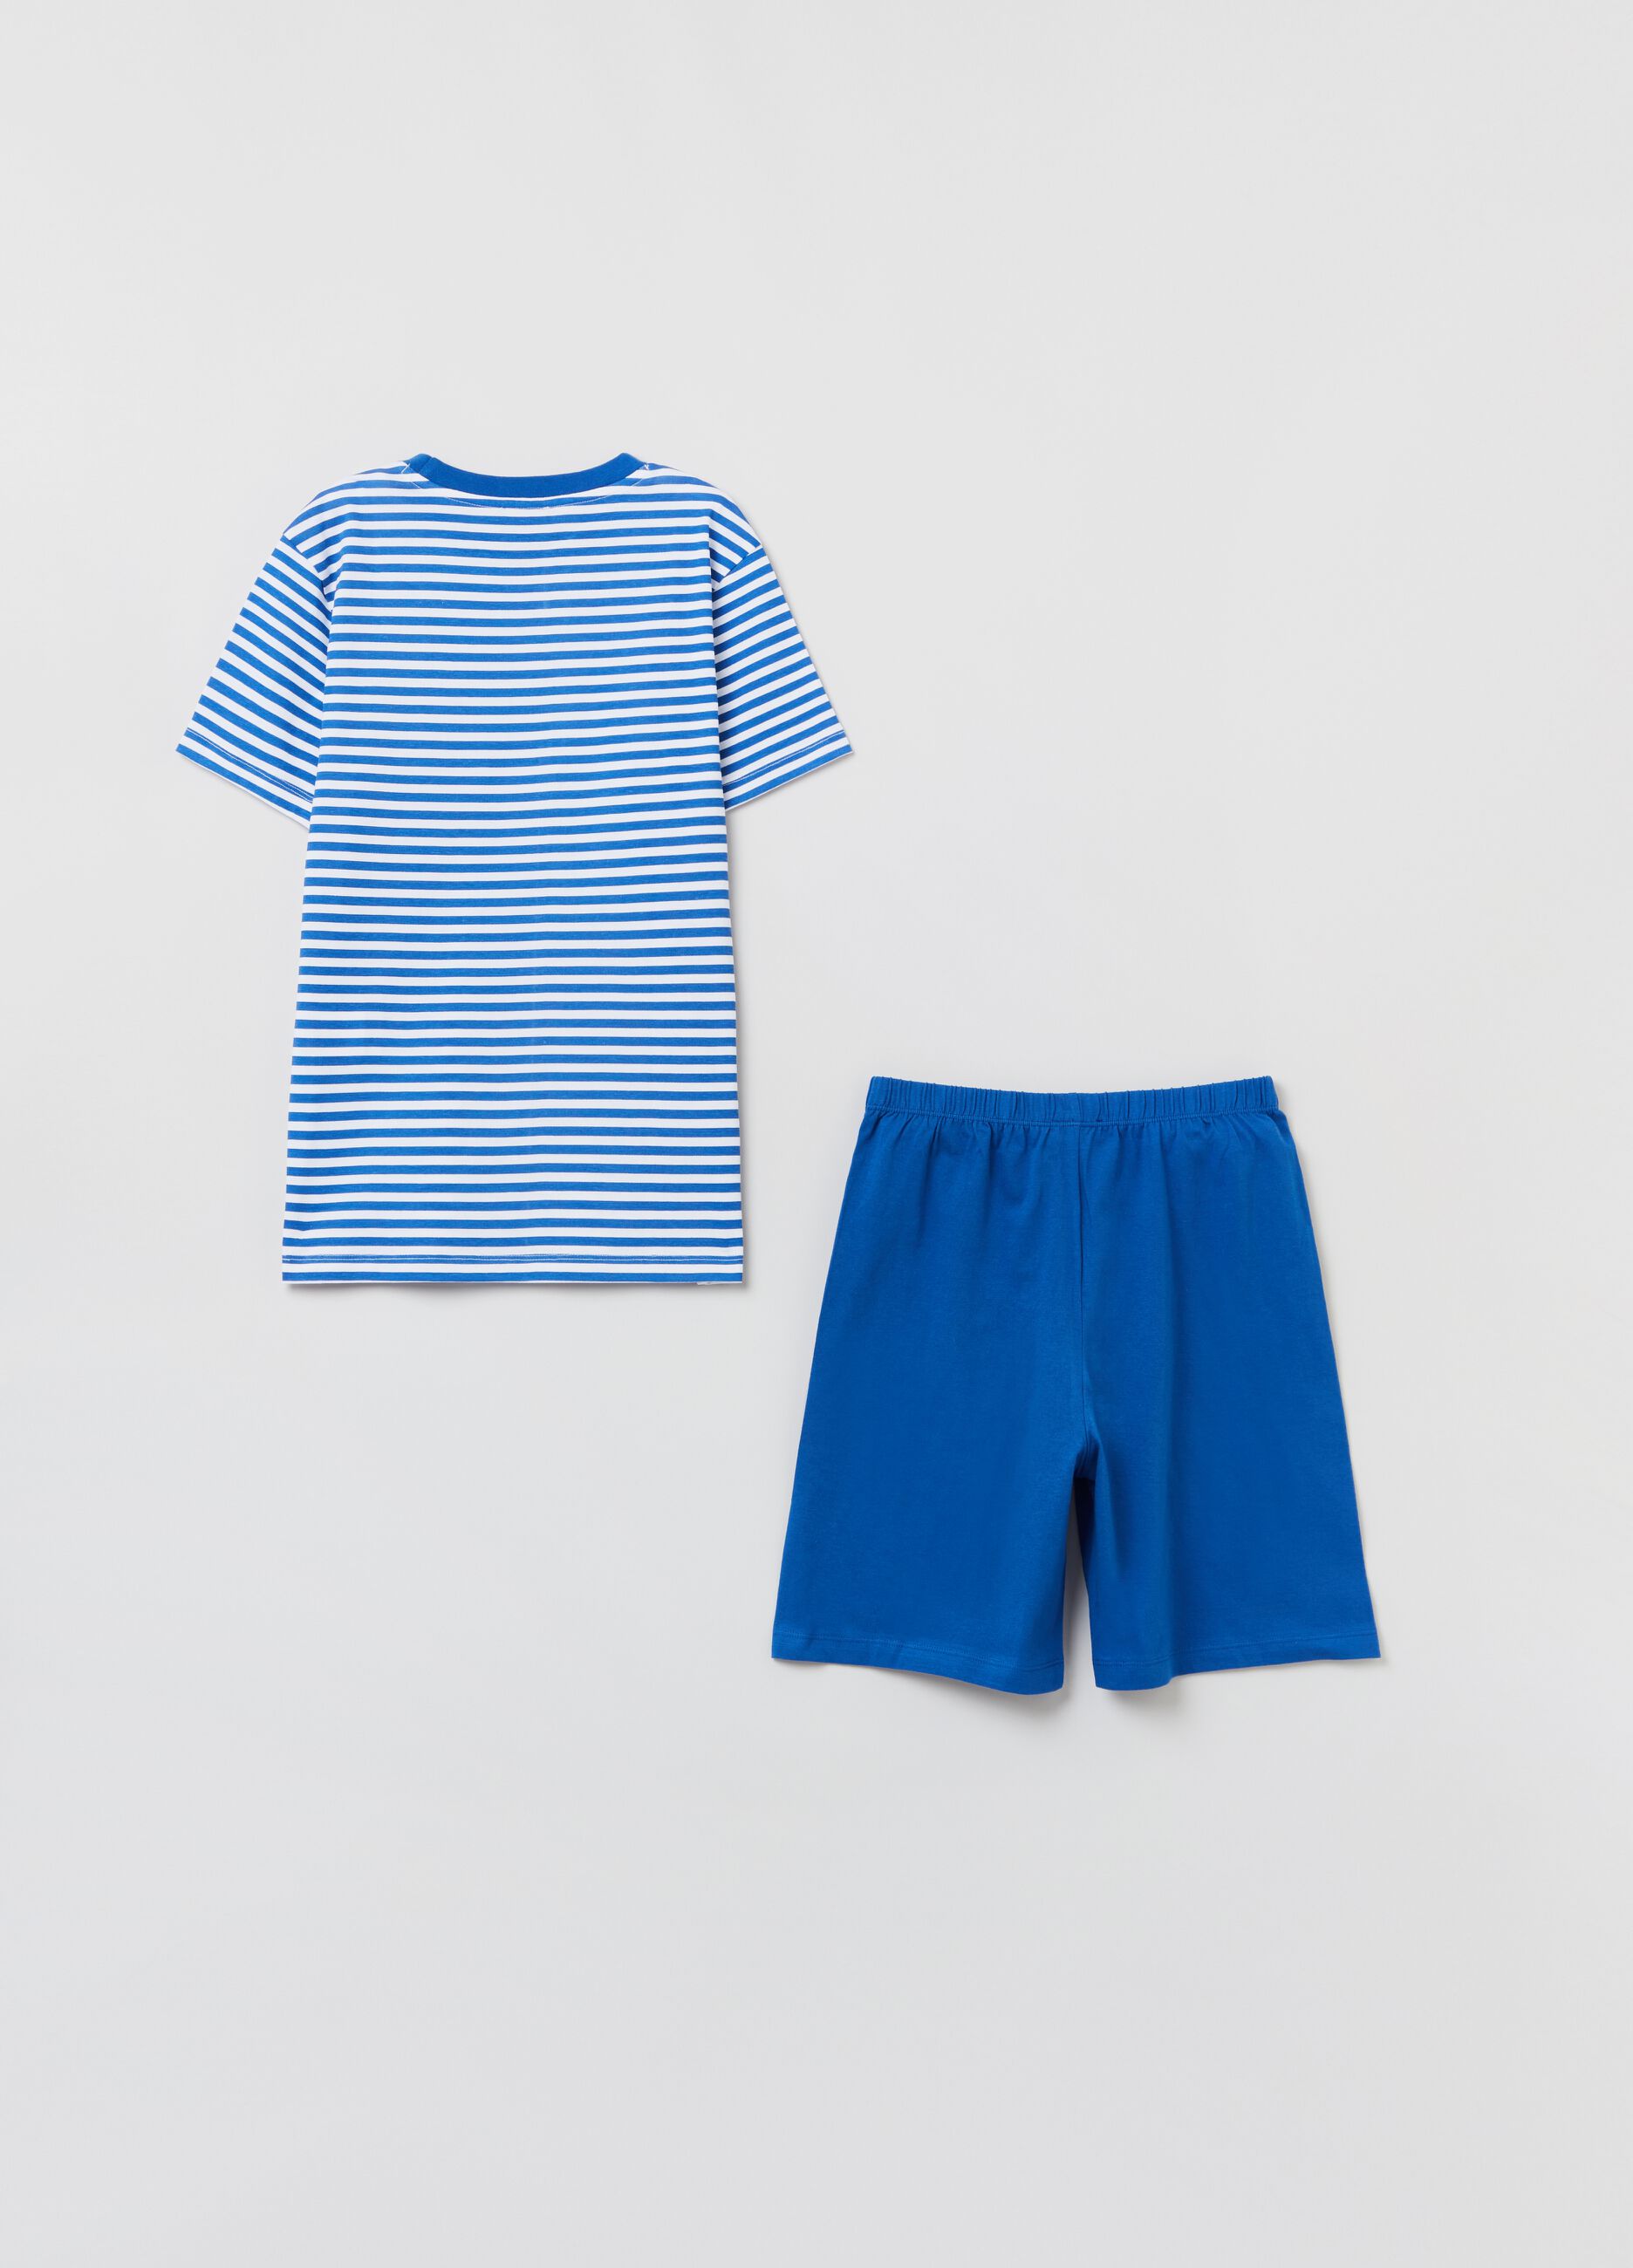 Short cotton pyjamas with stripes